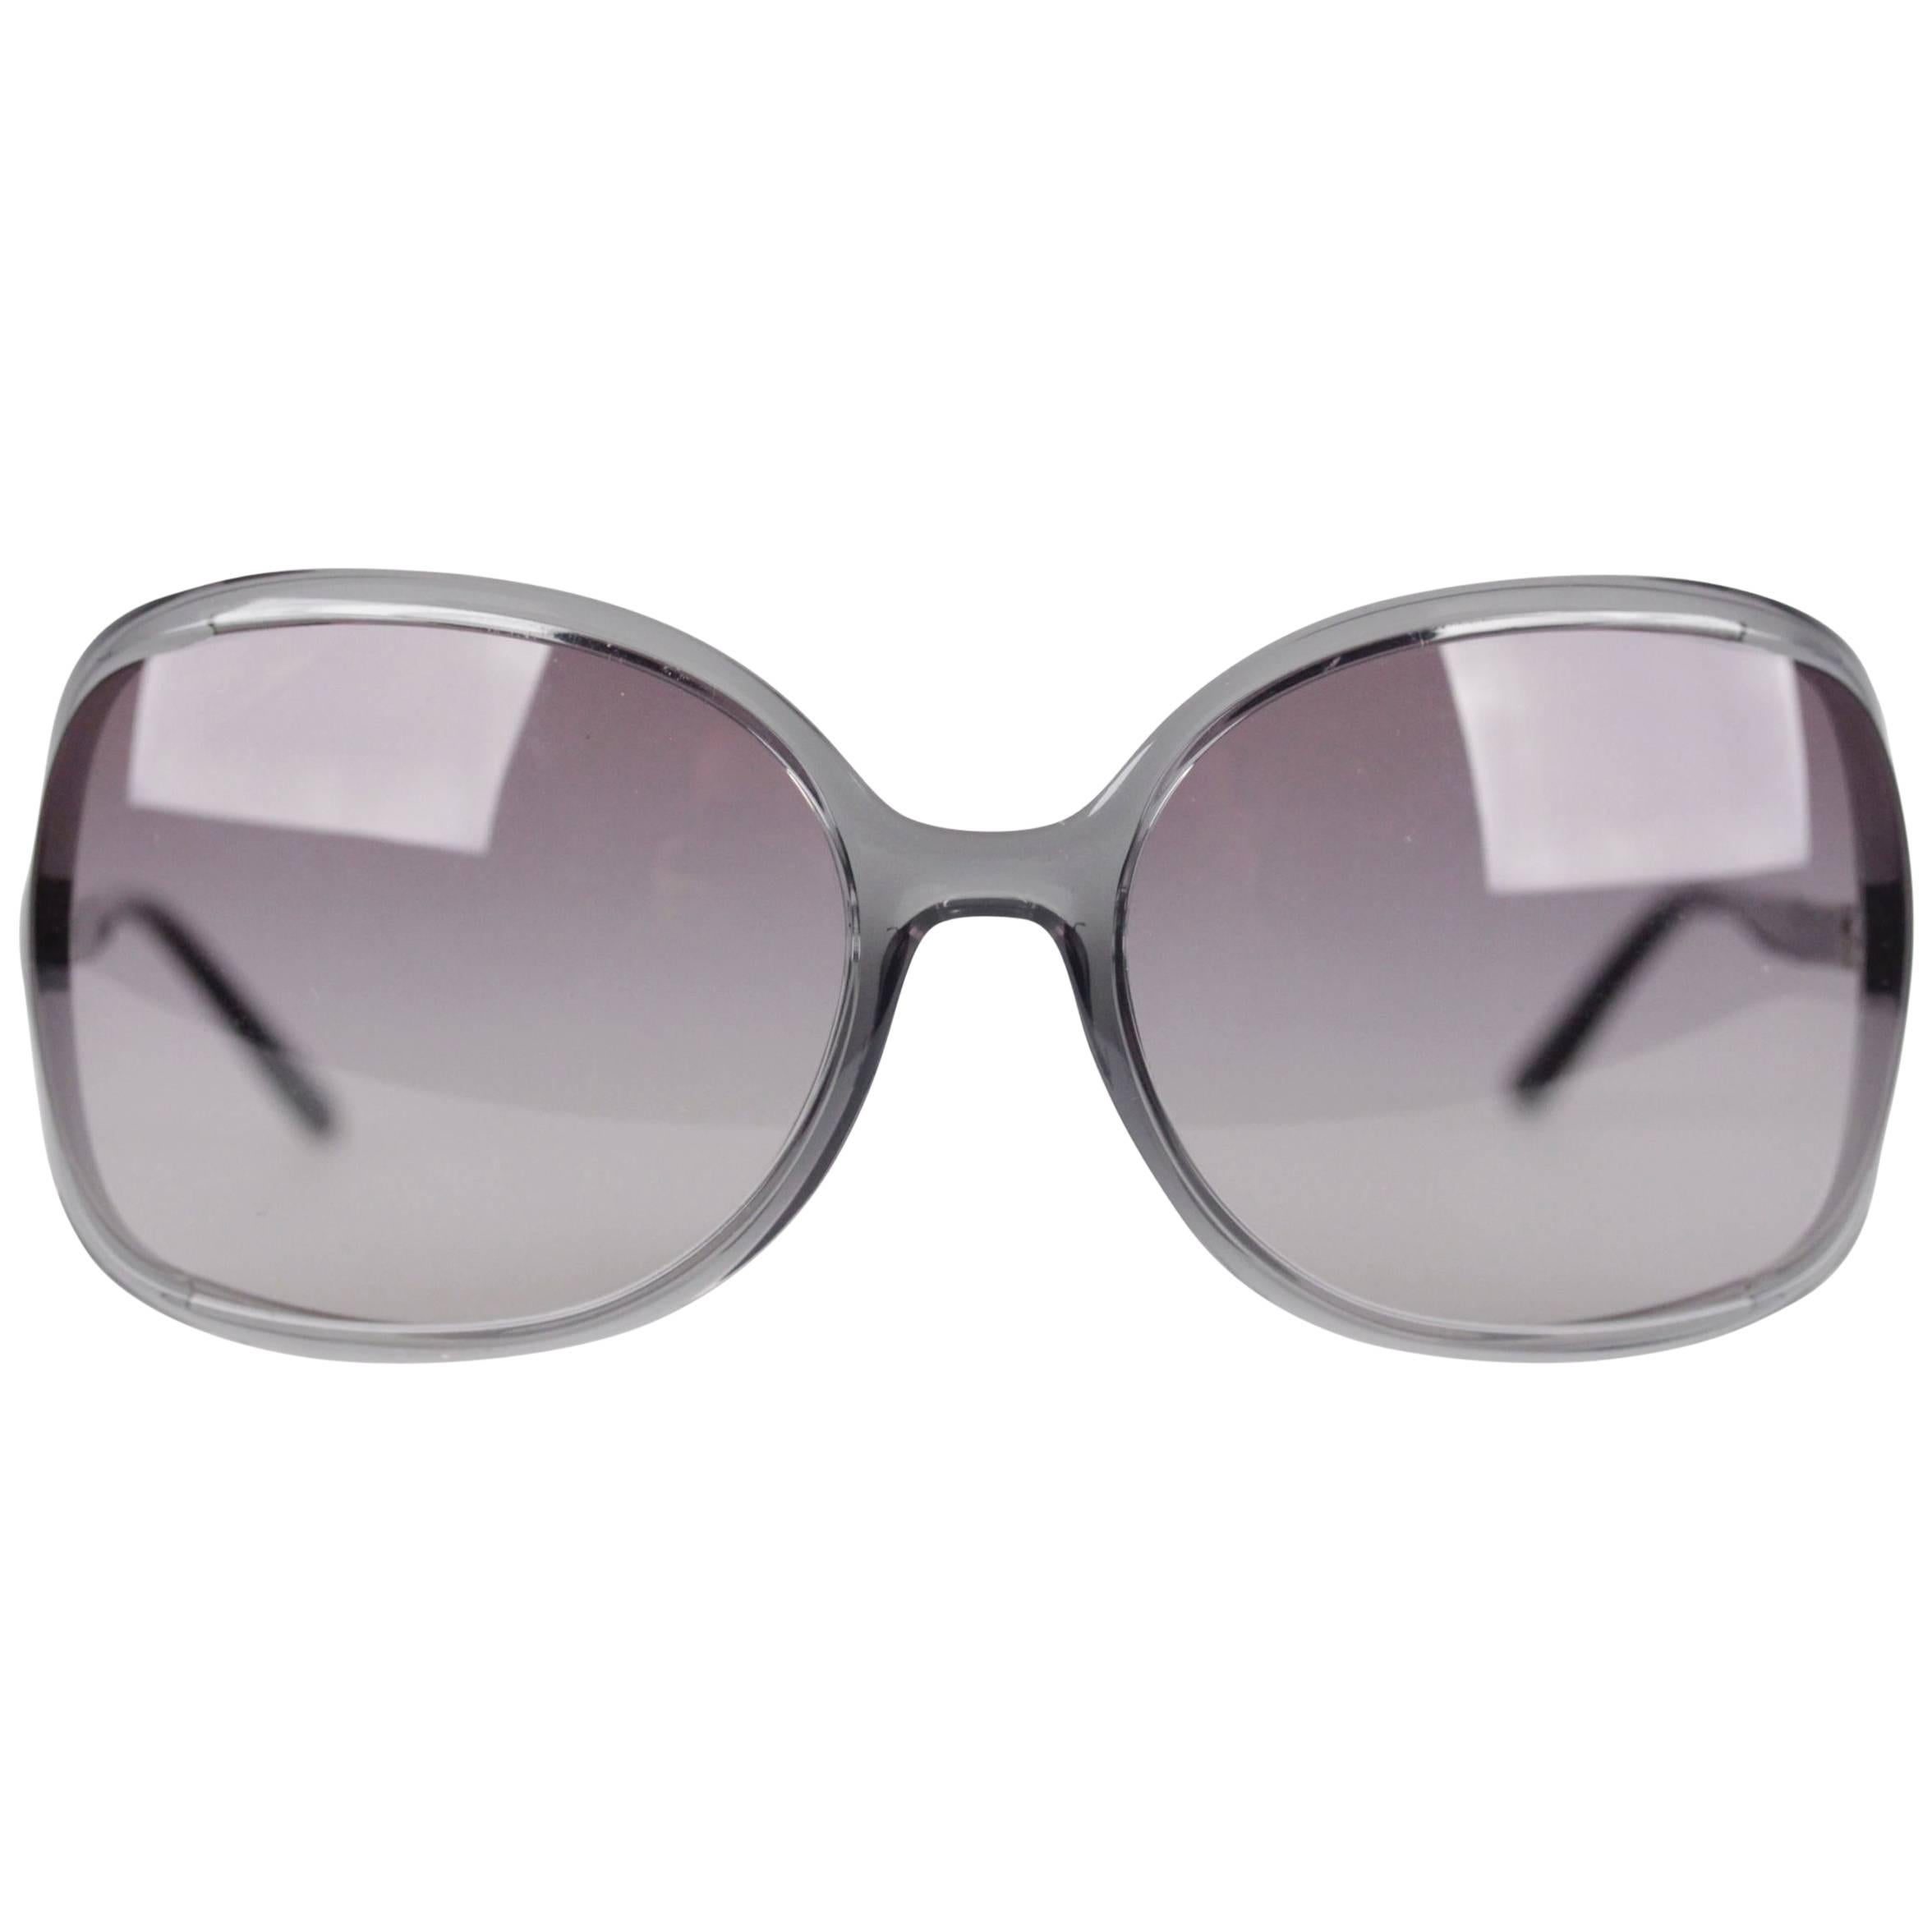 VERSACE Mint Sunglasses mod 4174 236/11 61/19 125 2N gray frame w/CASE